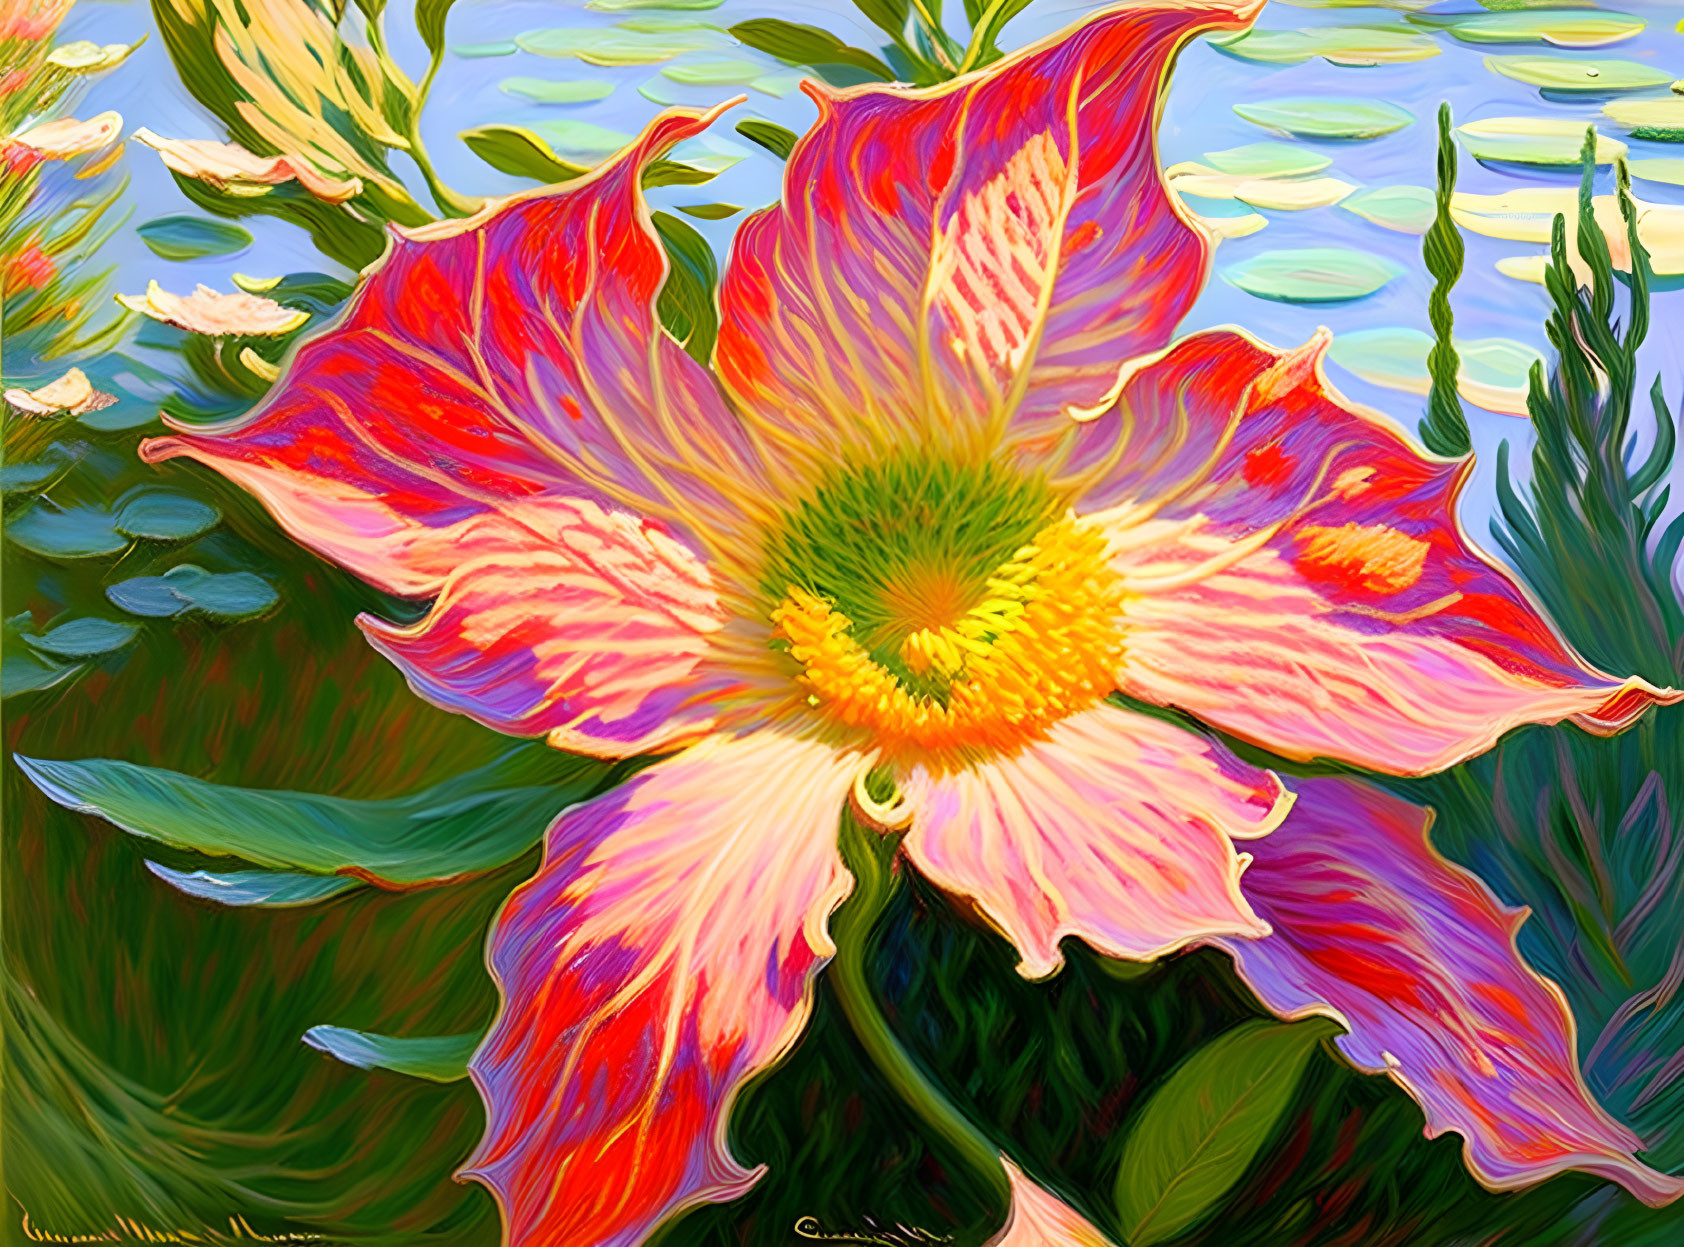 Monet's Lily